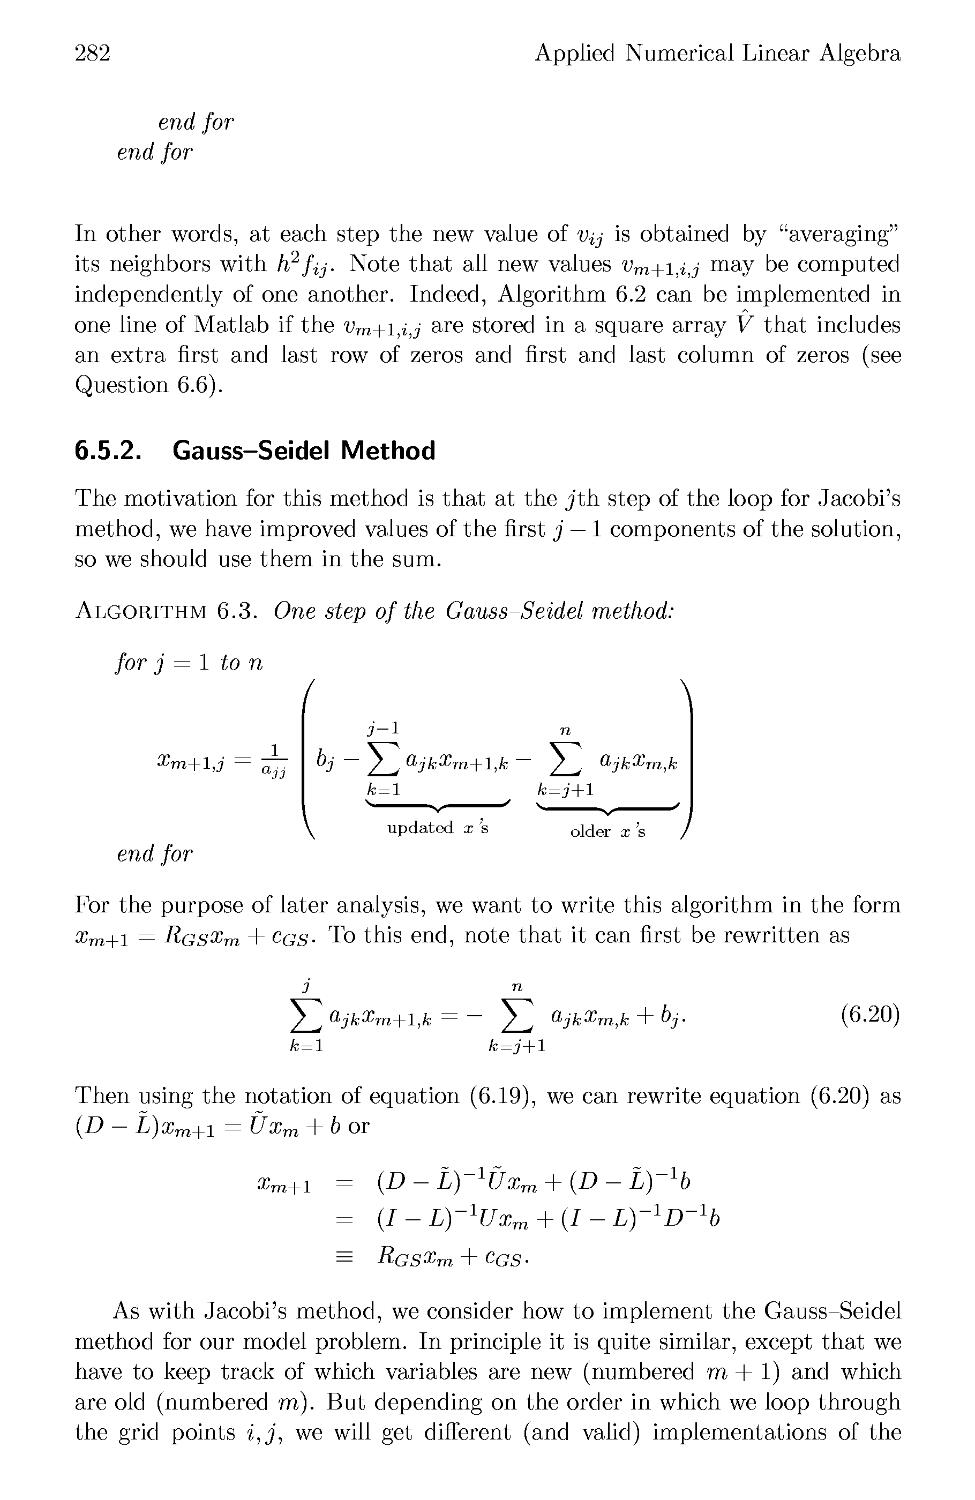 6.5.2 Gauss-Seidel Method